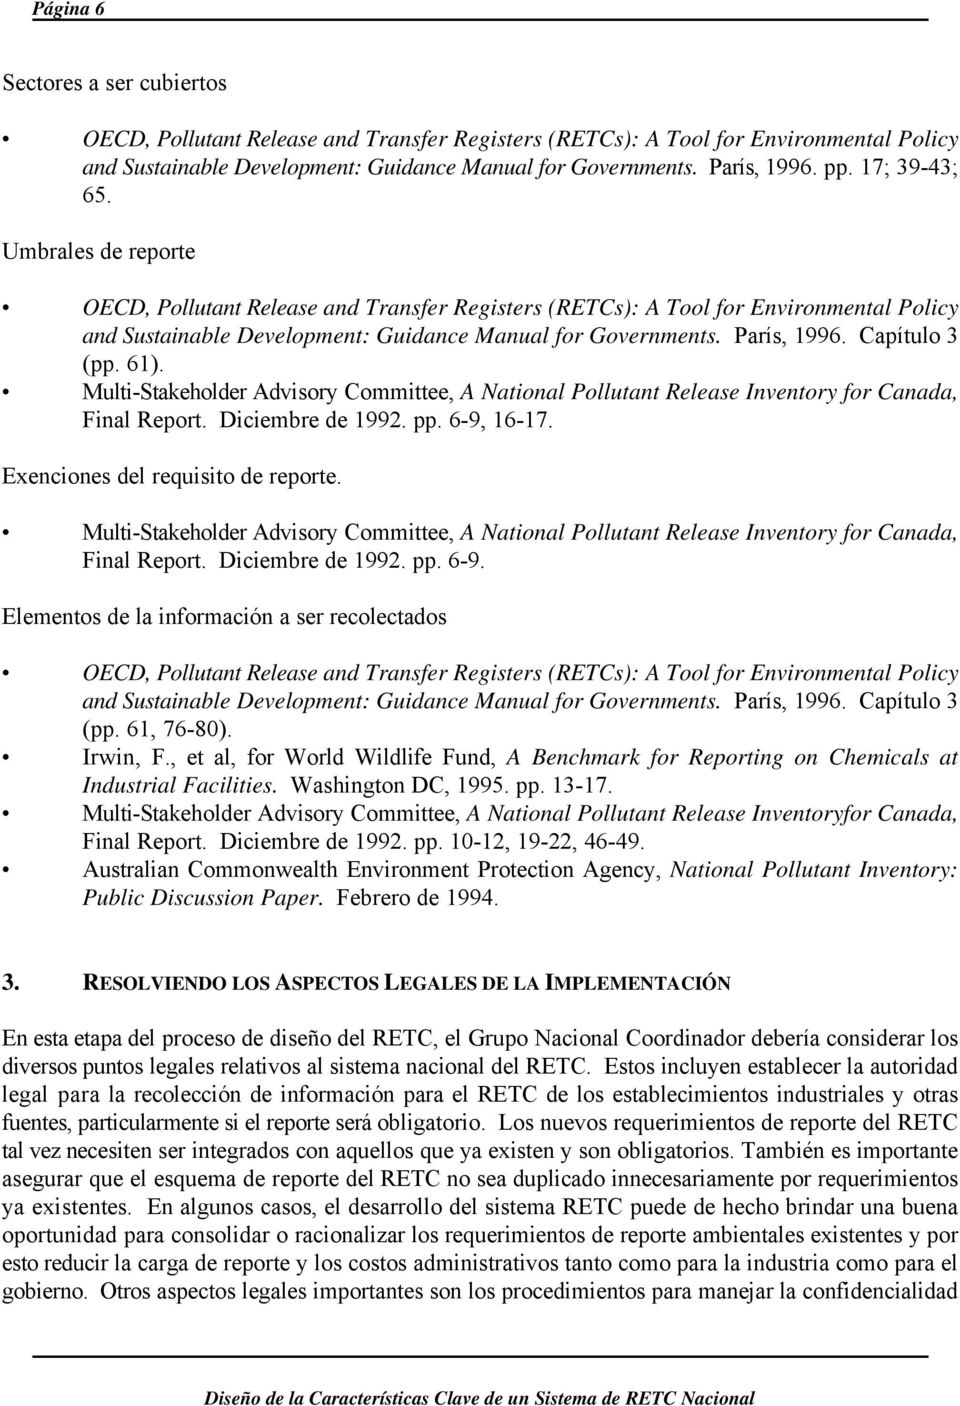 Capítulo 3 (pp. 61). Multi-Stakeholder Advisory Committee, A National Pollutant Release Inventory for Canada, Final Report. Diciembre de 1992. pp. 6-9, 16-17. Exenciones del requisito de reporte.